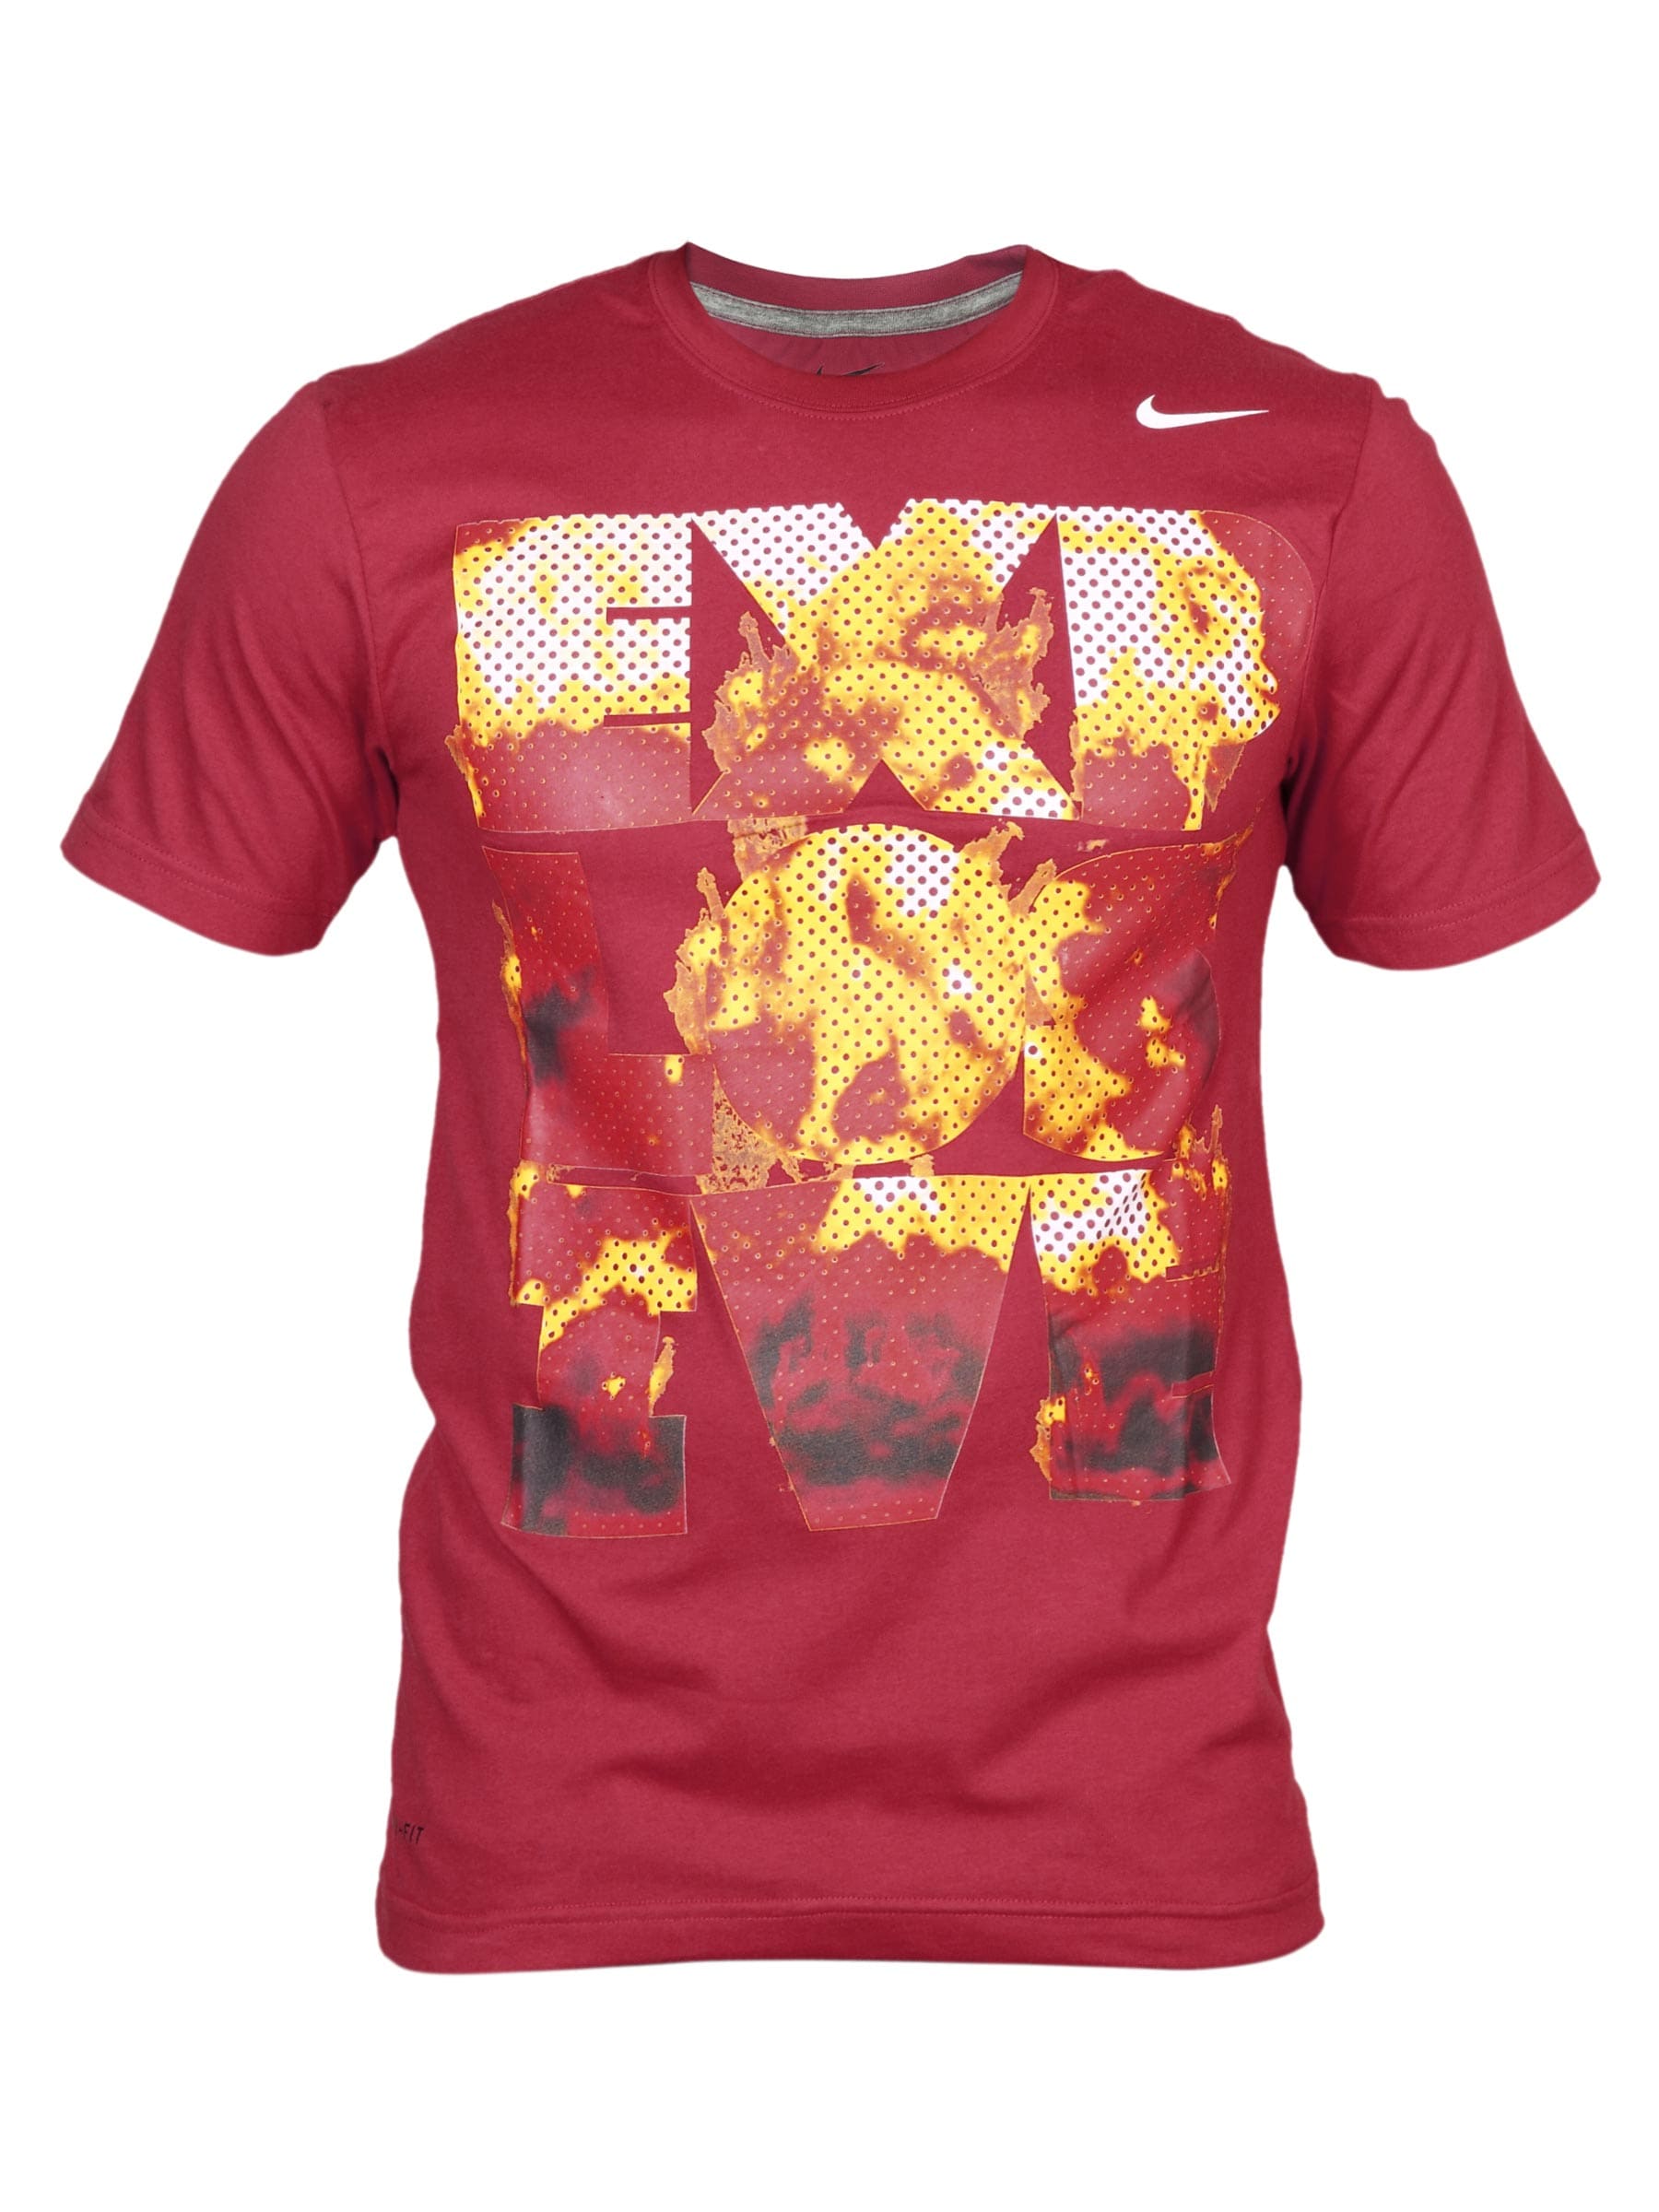 Nike Men's As Explosive Red T-shirt